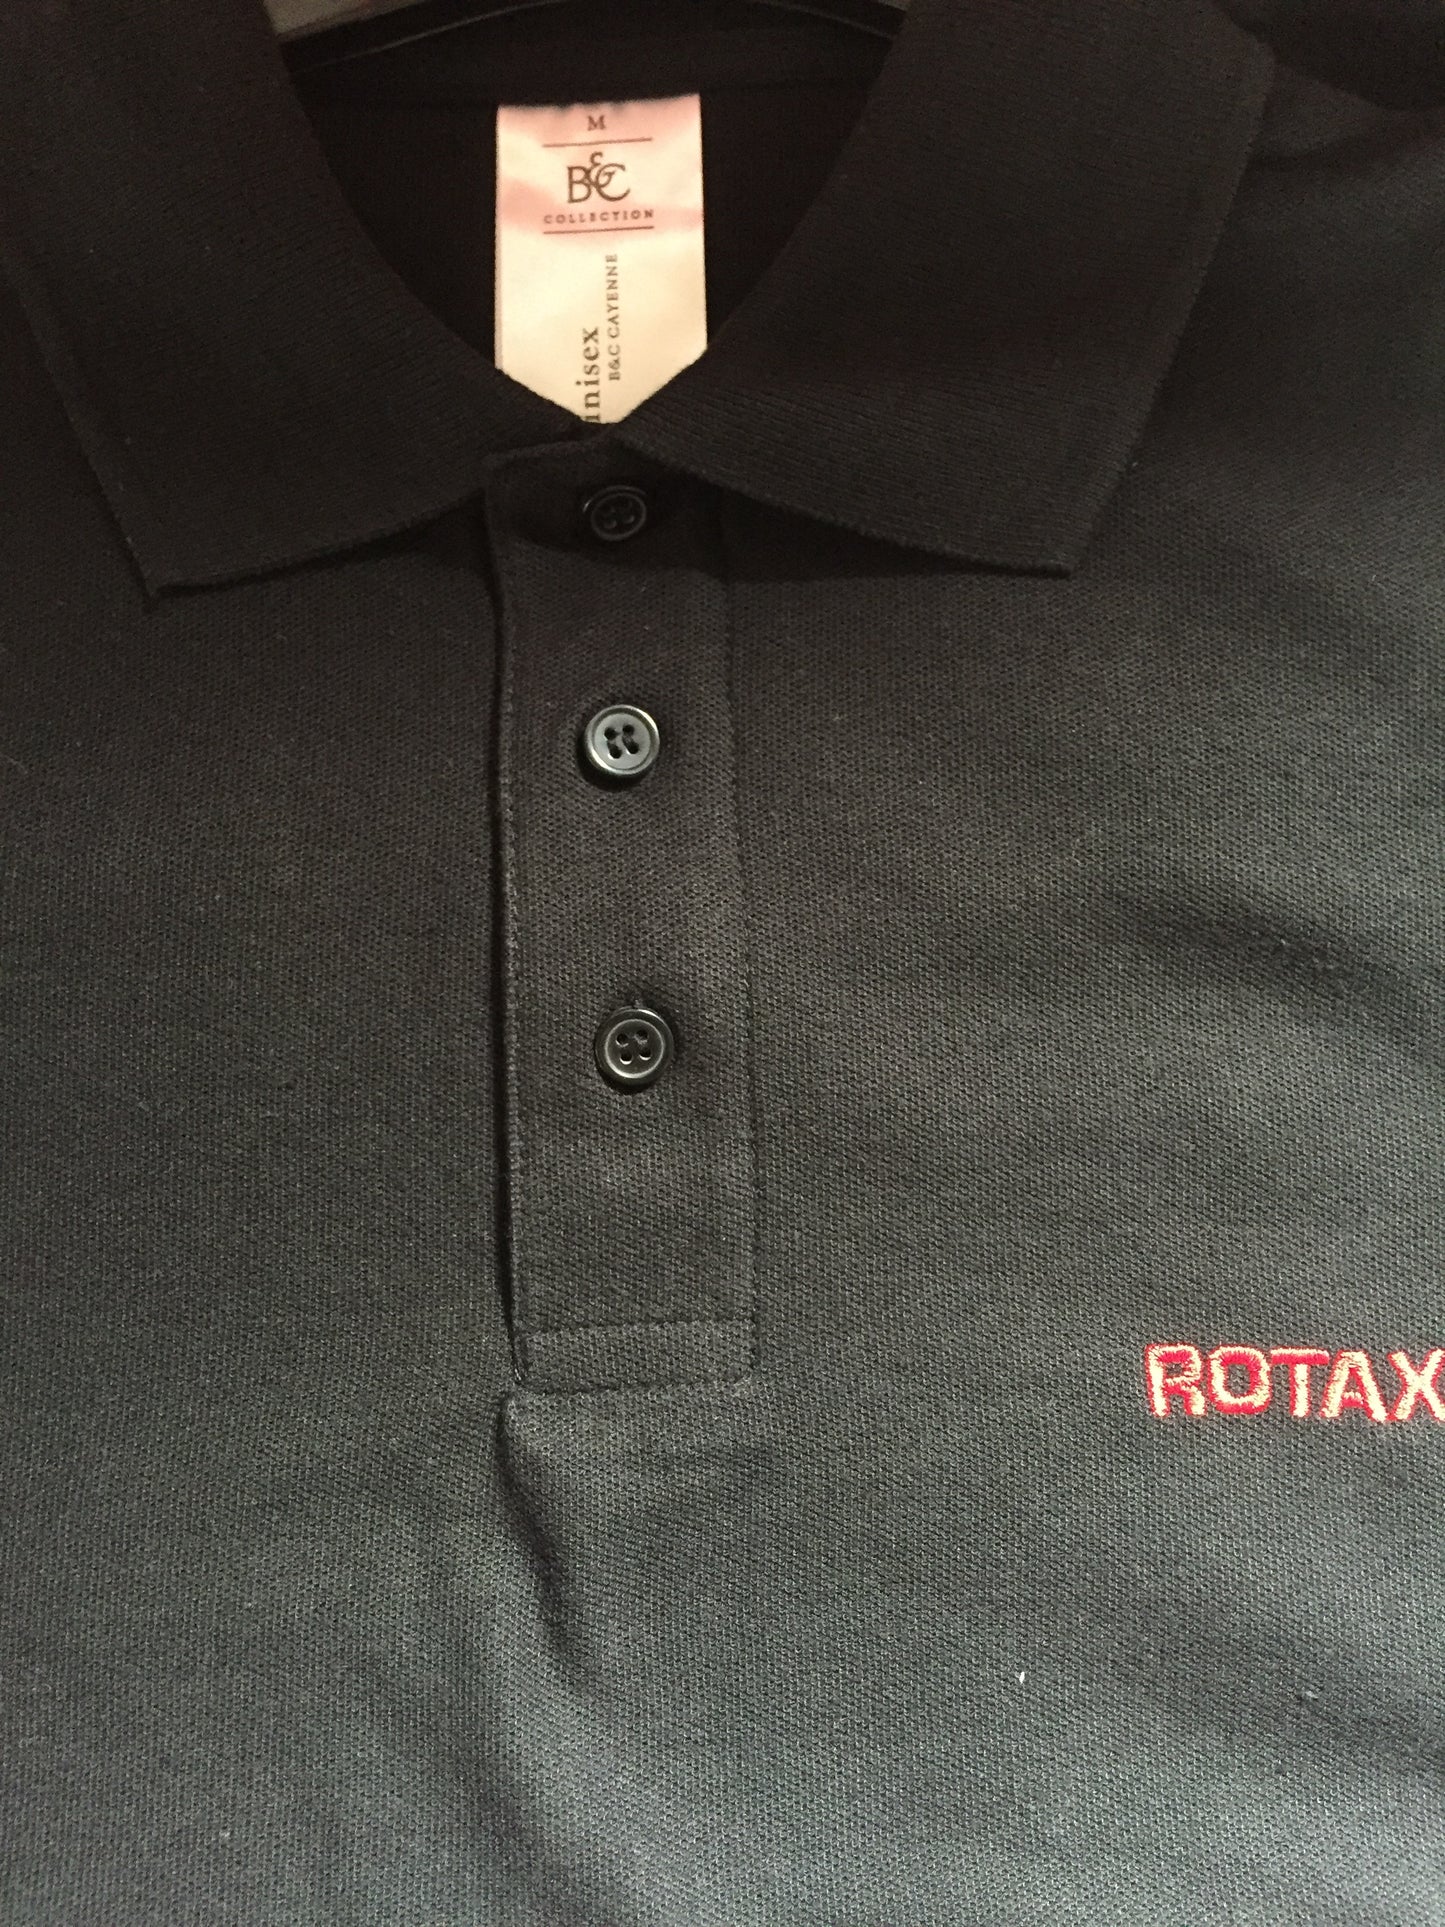 Rotax Polo T-Shirt - Black